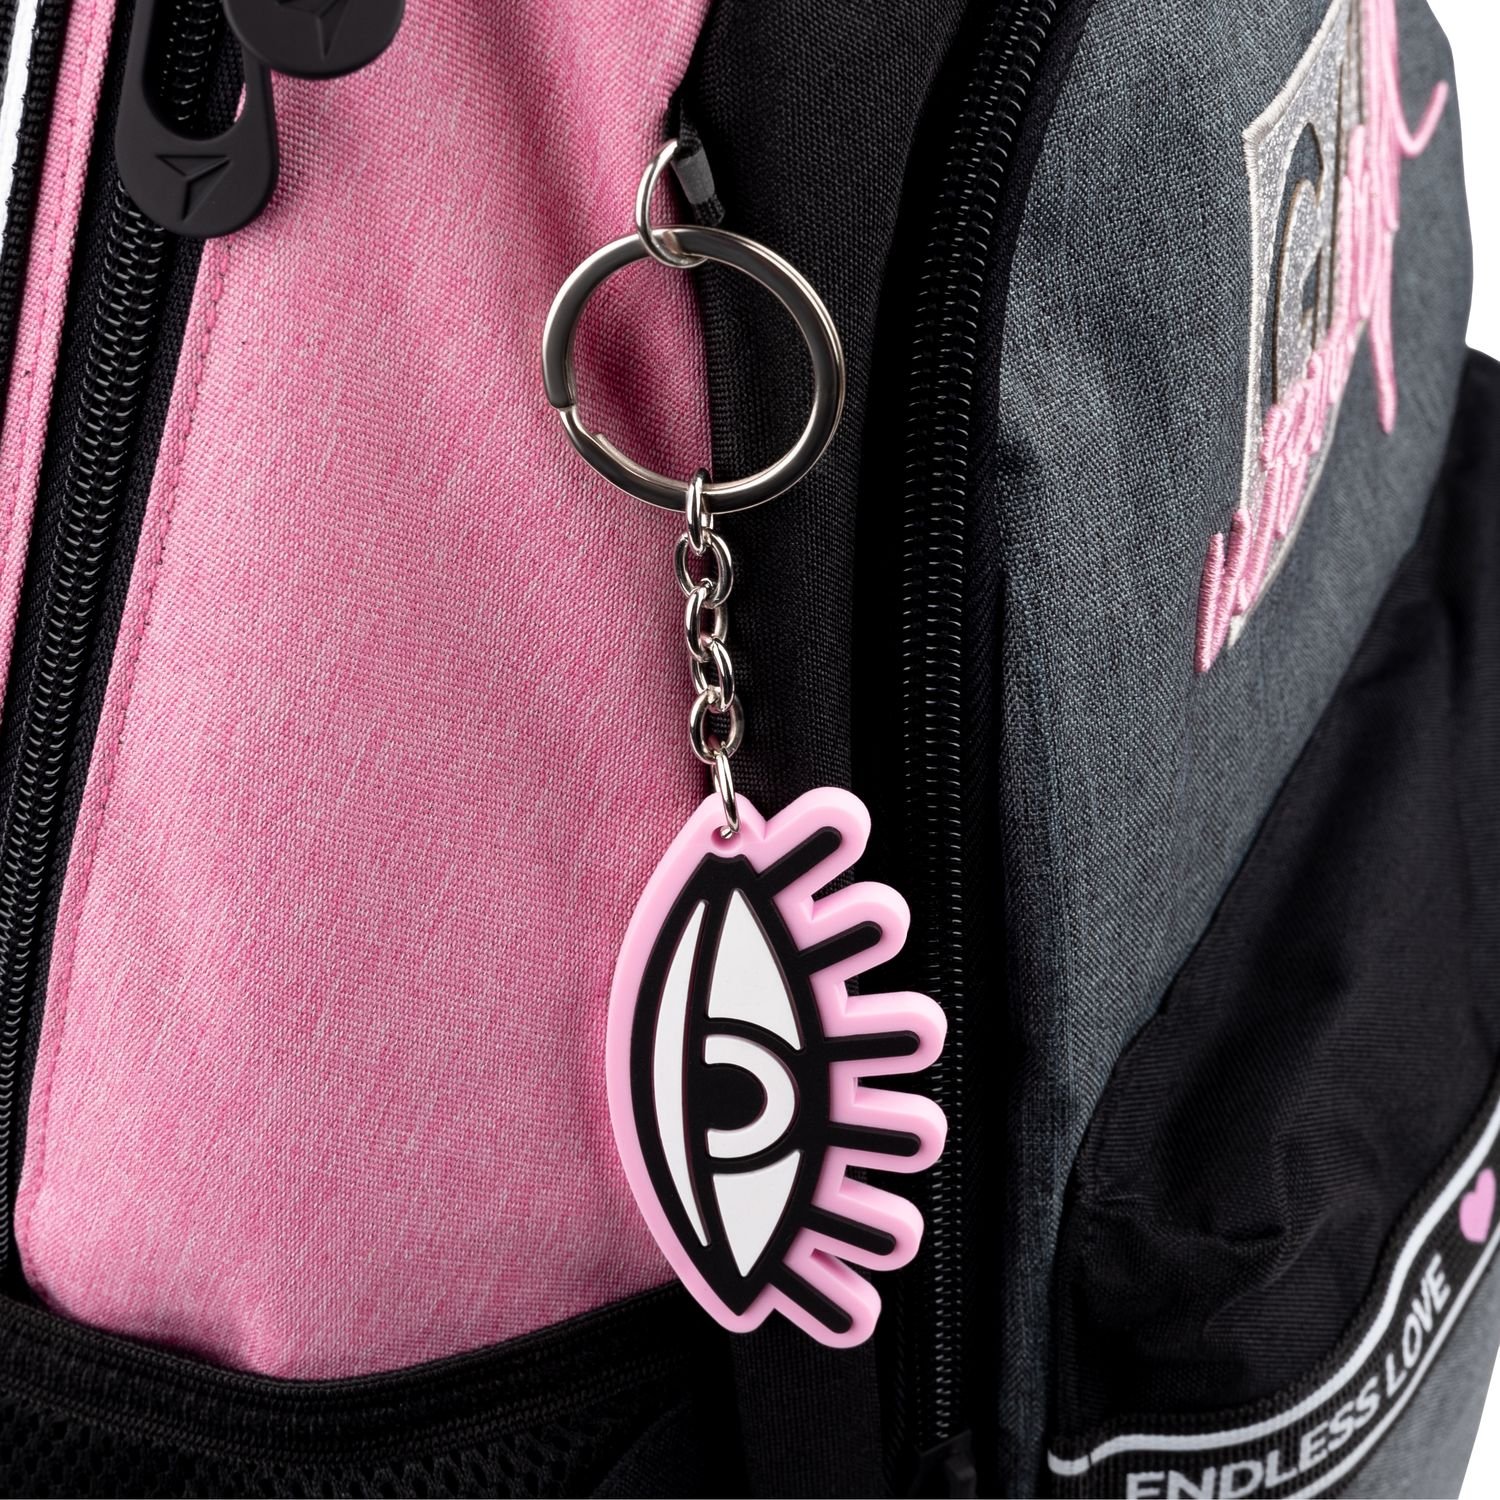 Рюкзак Yes TS-61 Girl Wonderful, черный с розовым (558908) - фото 9